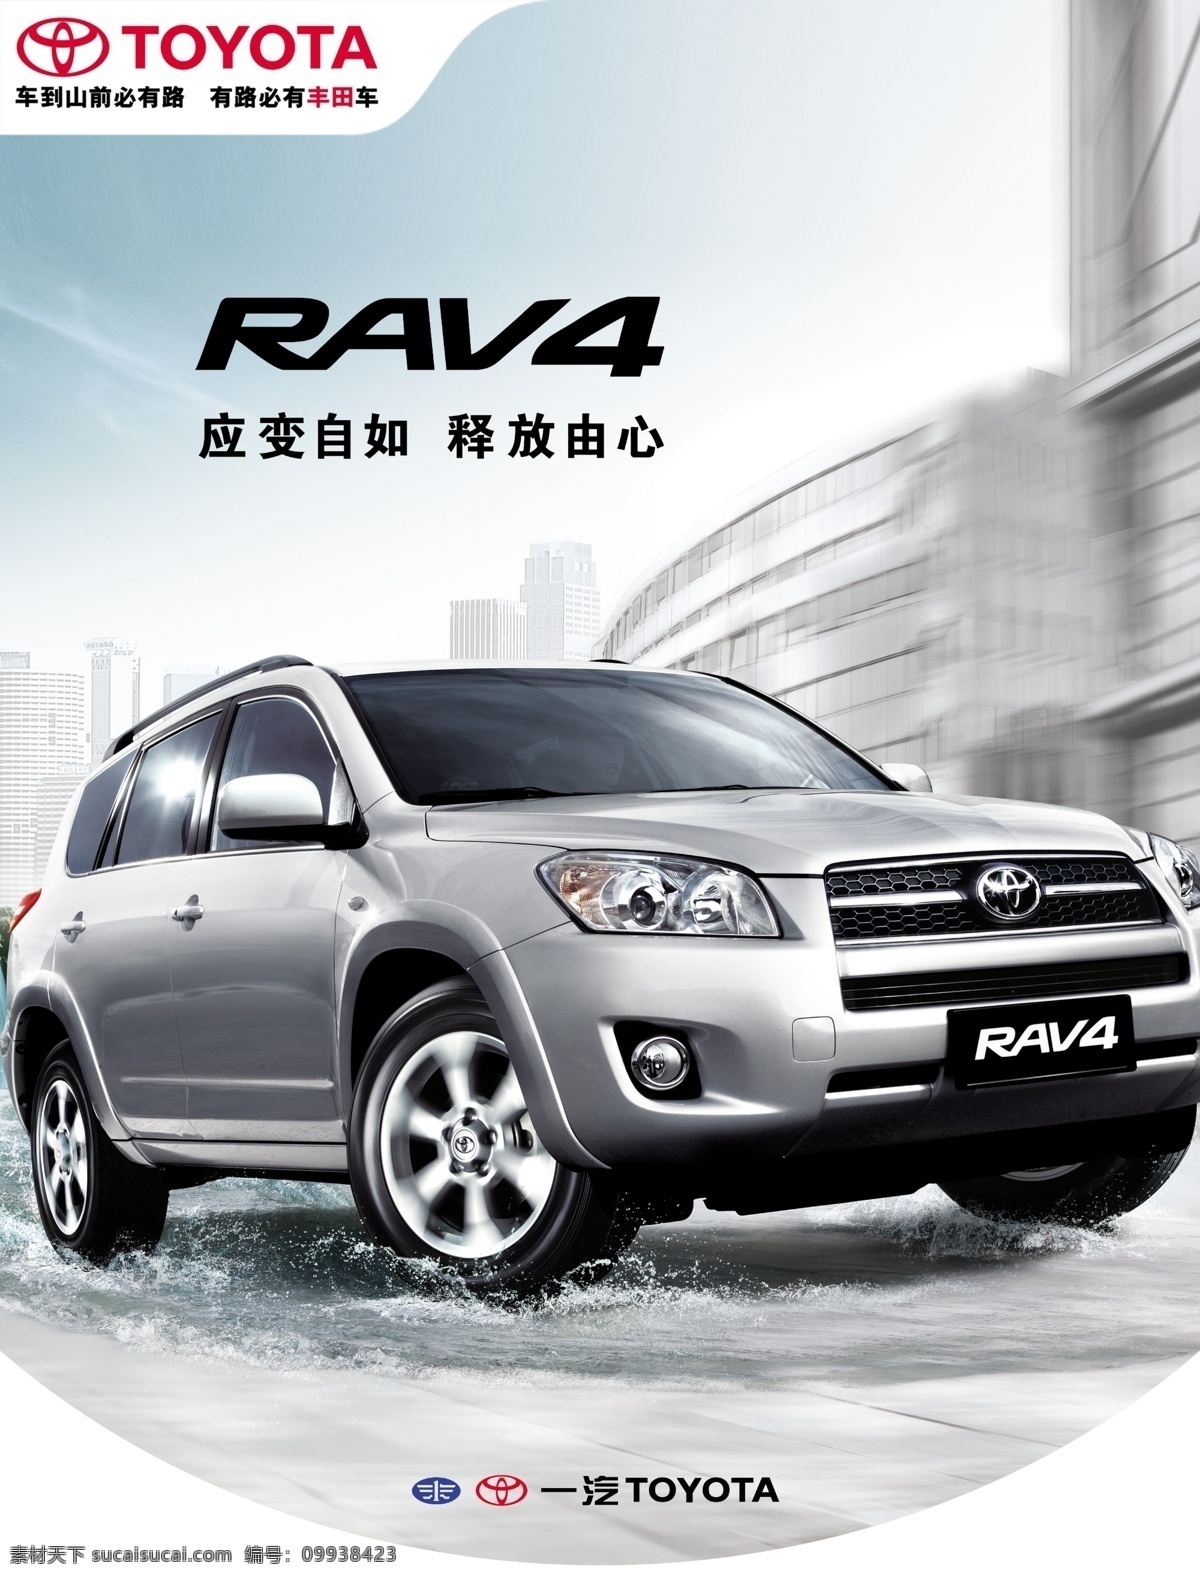 rav4丰田 rav4 丰田 一汽汽车 汽车 广告设计模板 源文件